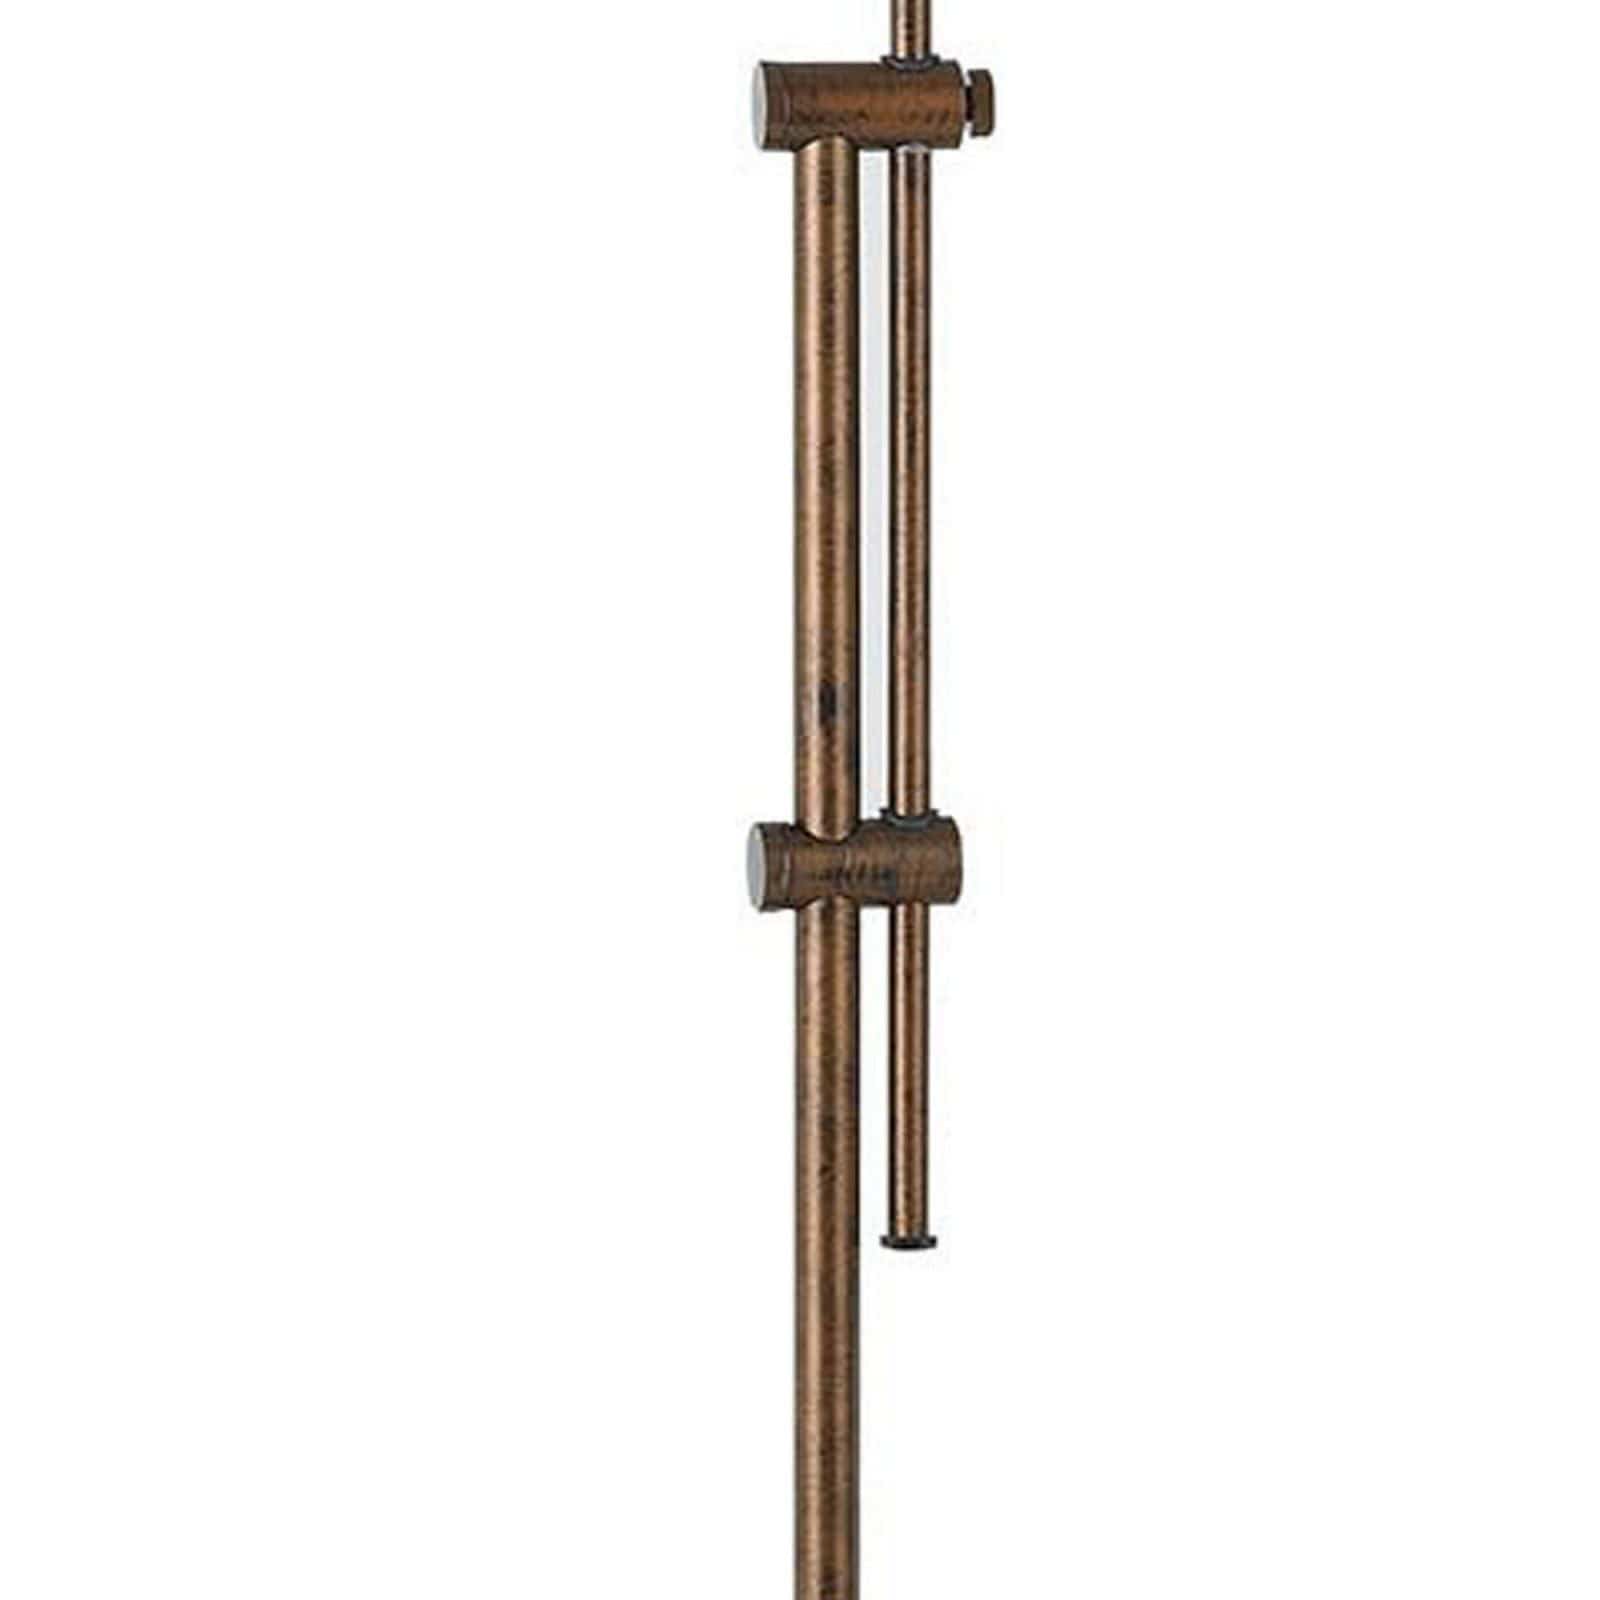 Benzara Adjustable Height Metal Pharmacy Lamp With Pull Chain Switch, Bronze By Benzara Floor Lamps BM220839